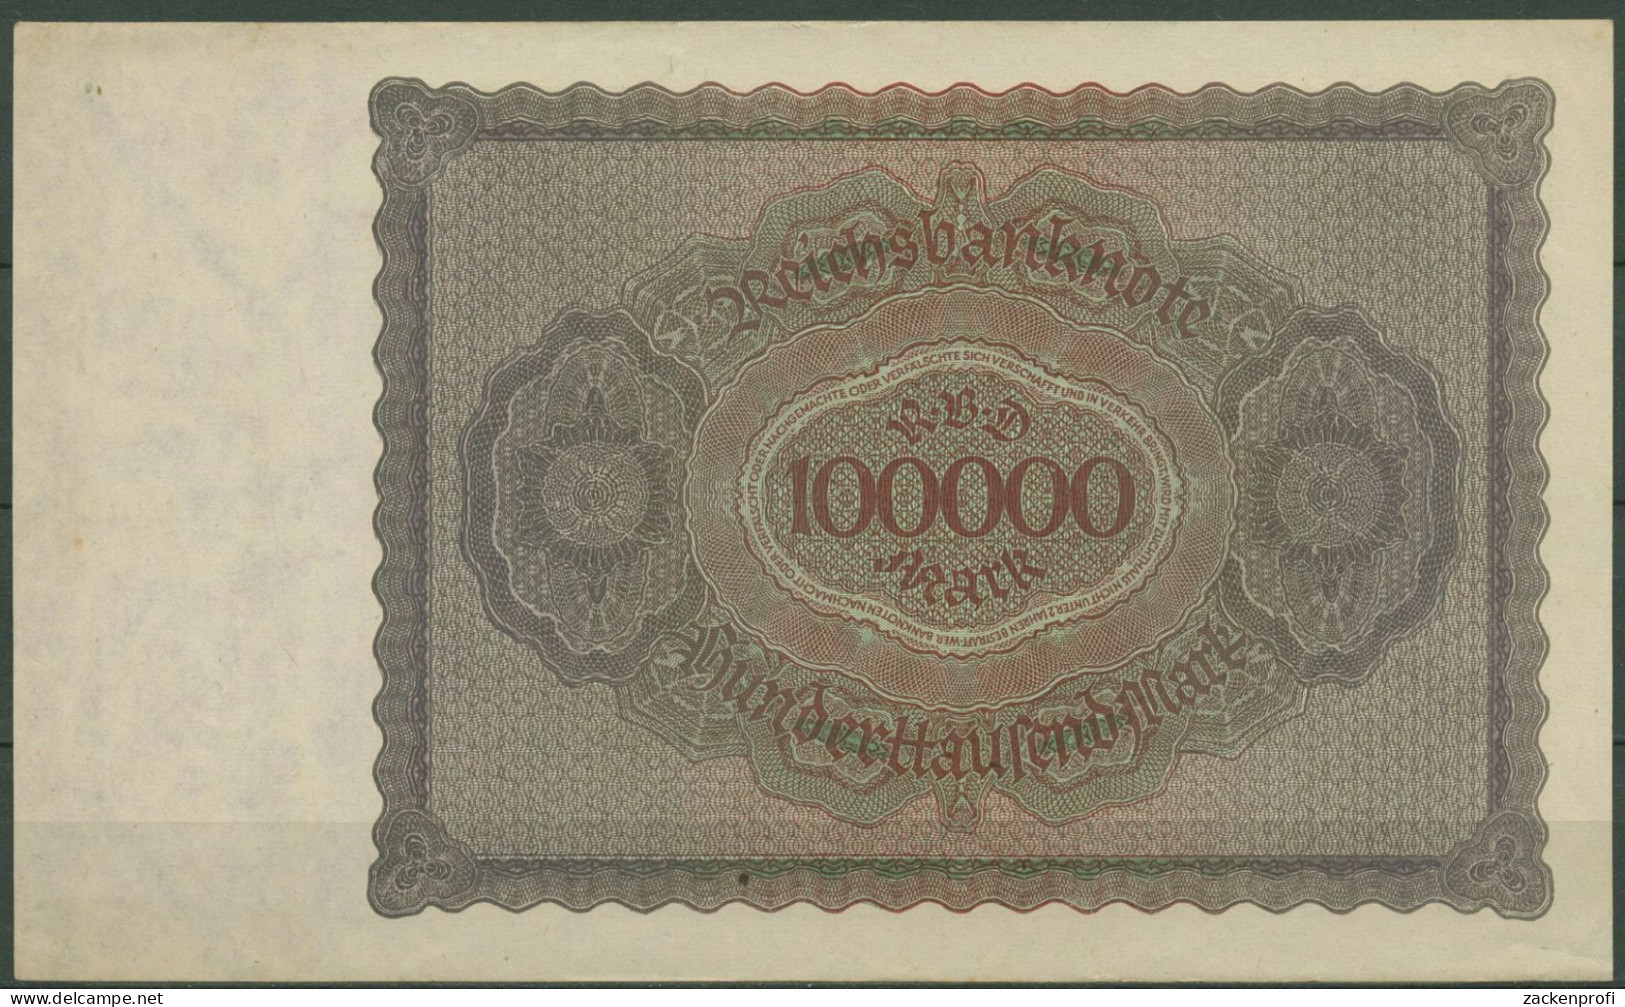 Dt. Reich 100000 Mark 1923, DEU-93a Serie O, Leicht Gebraucht (K1388) - 100000 Mark